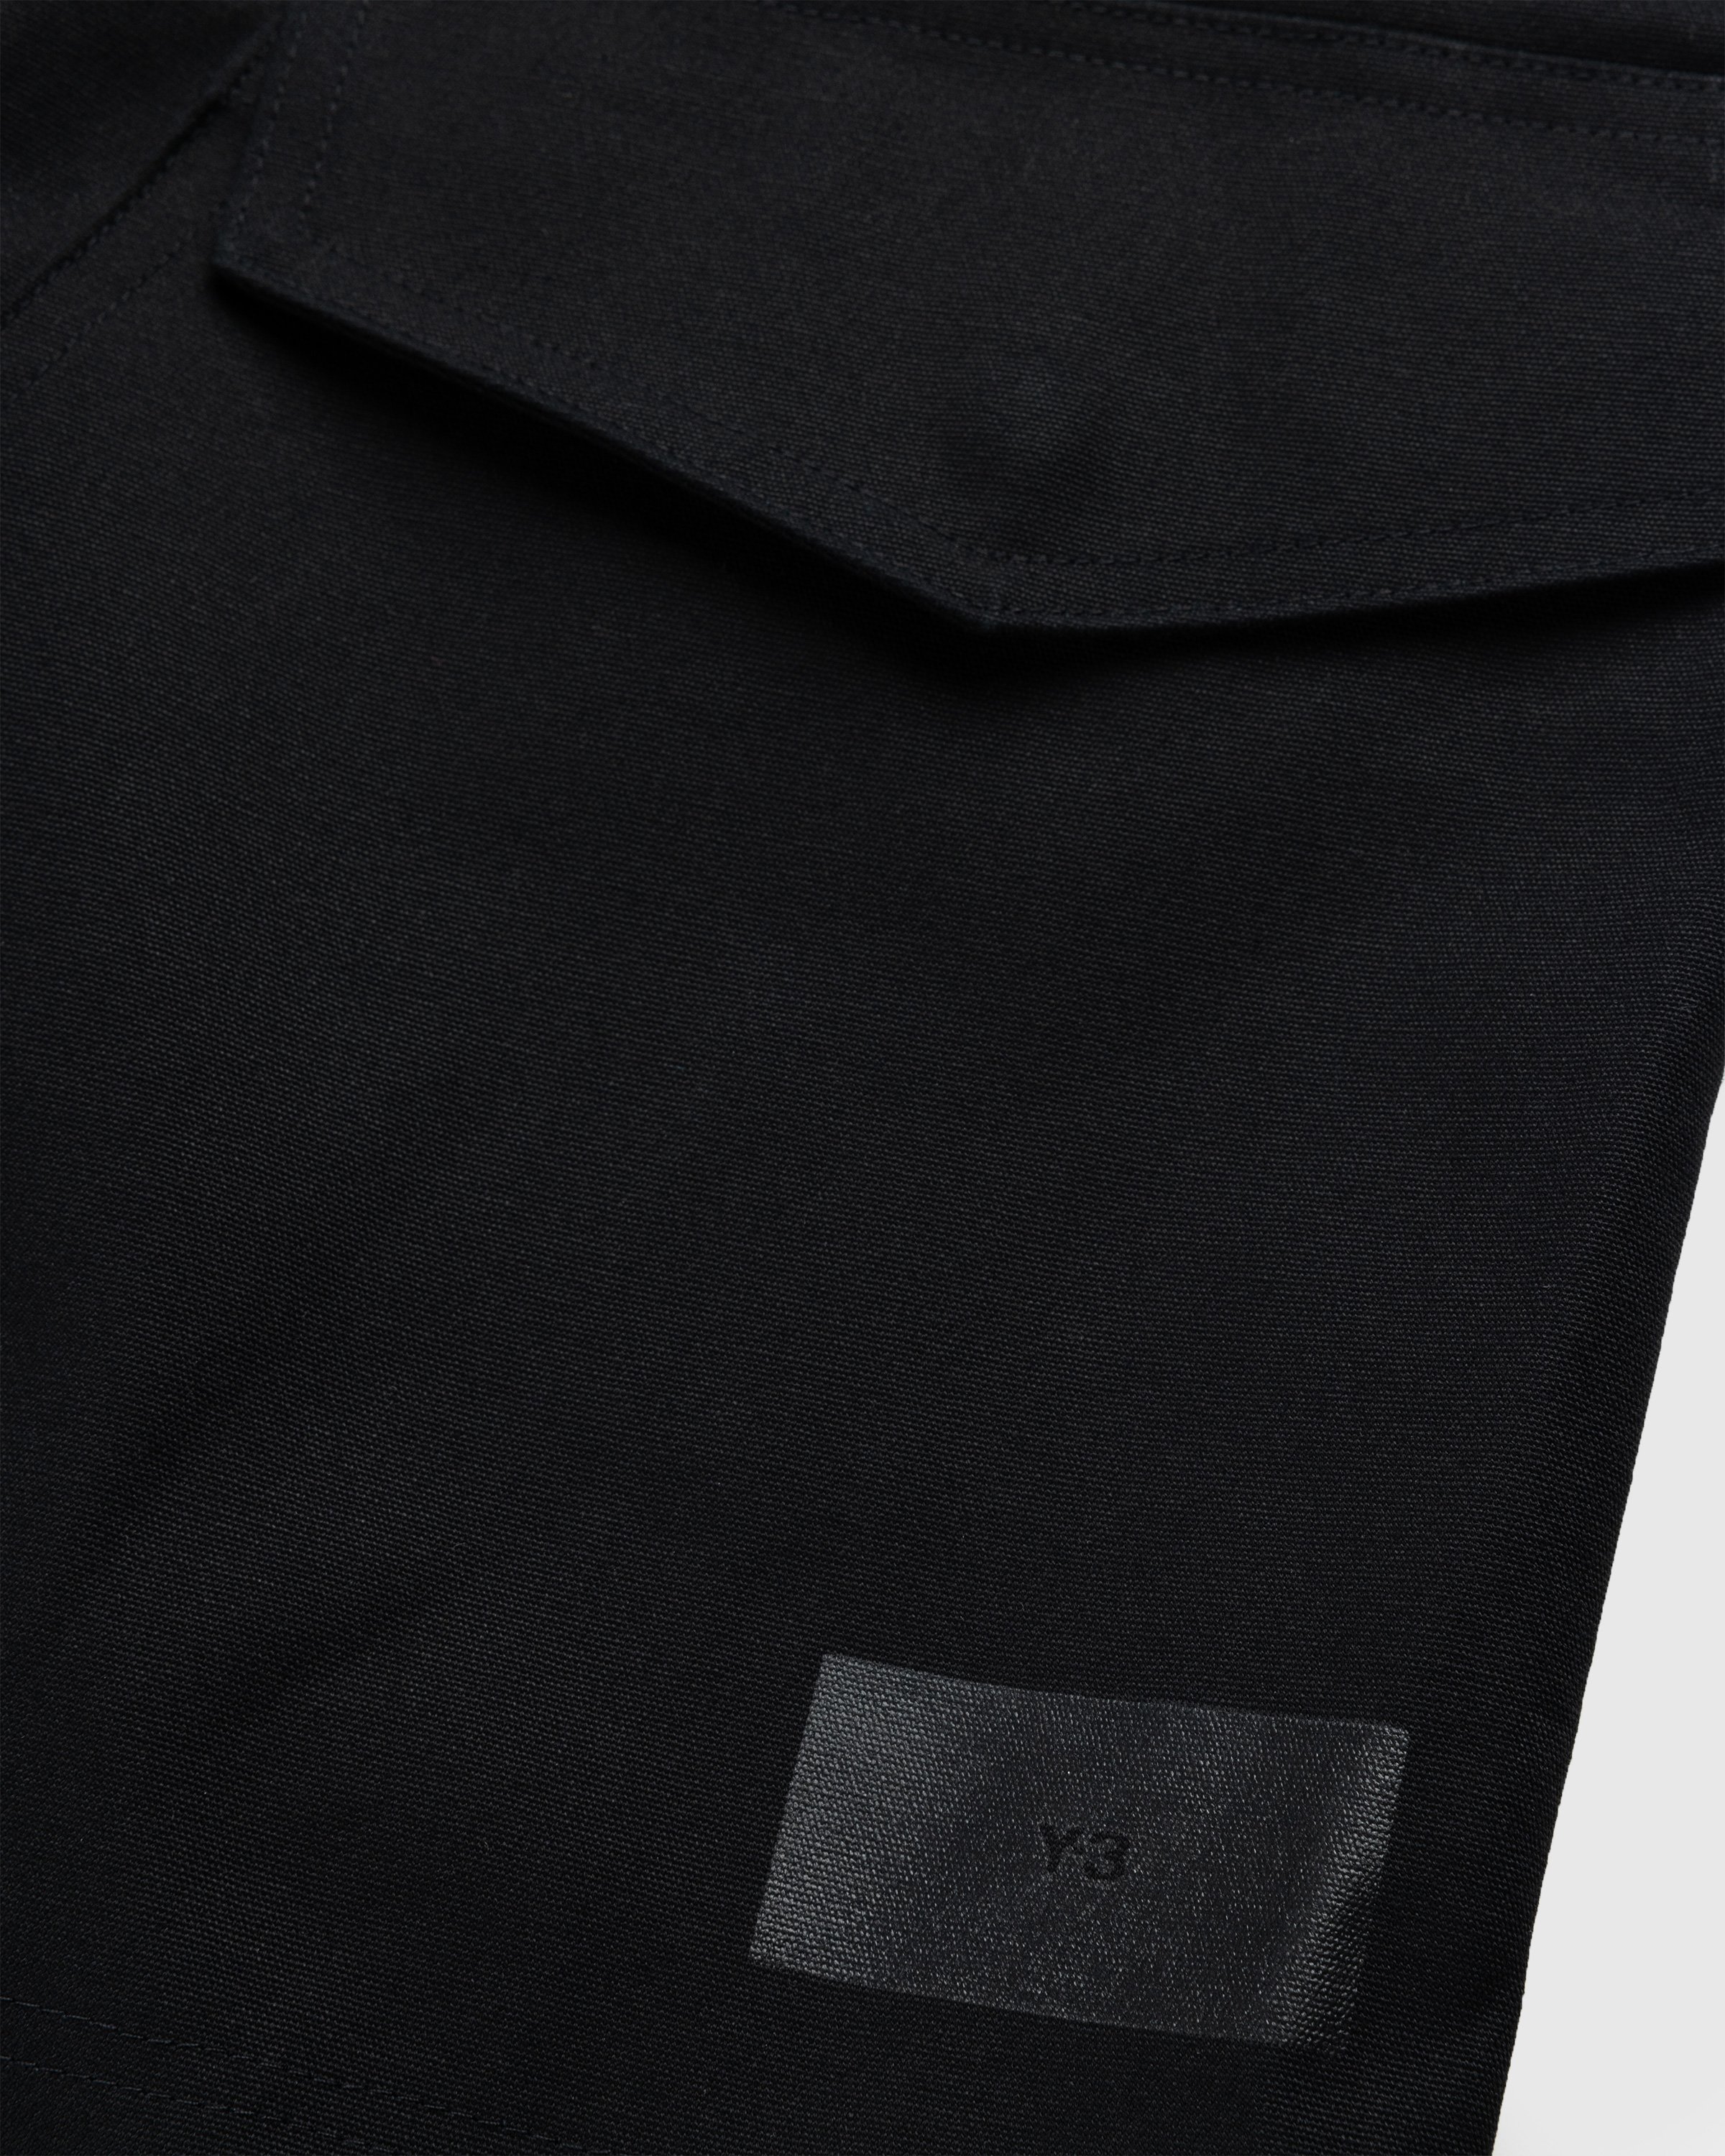 Y-3 - GFX Workwear Pants Black - Clothing - Black - Image 6